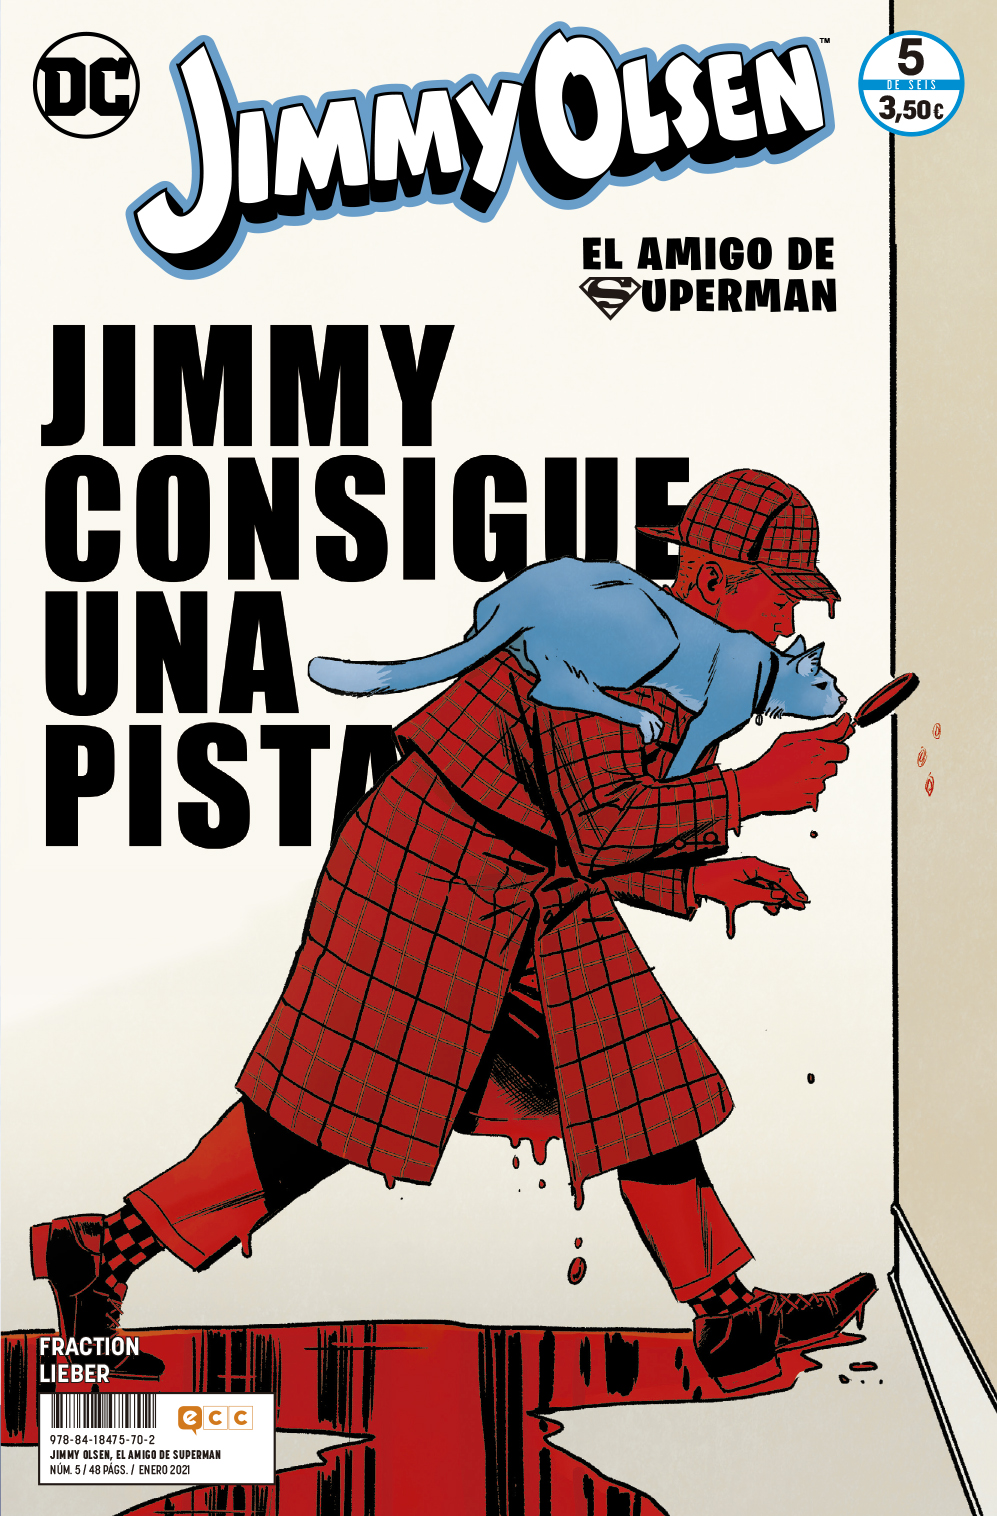 Jimmy Olsen, el amigo de Superman núm. 05 de 6